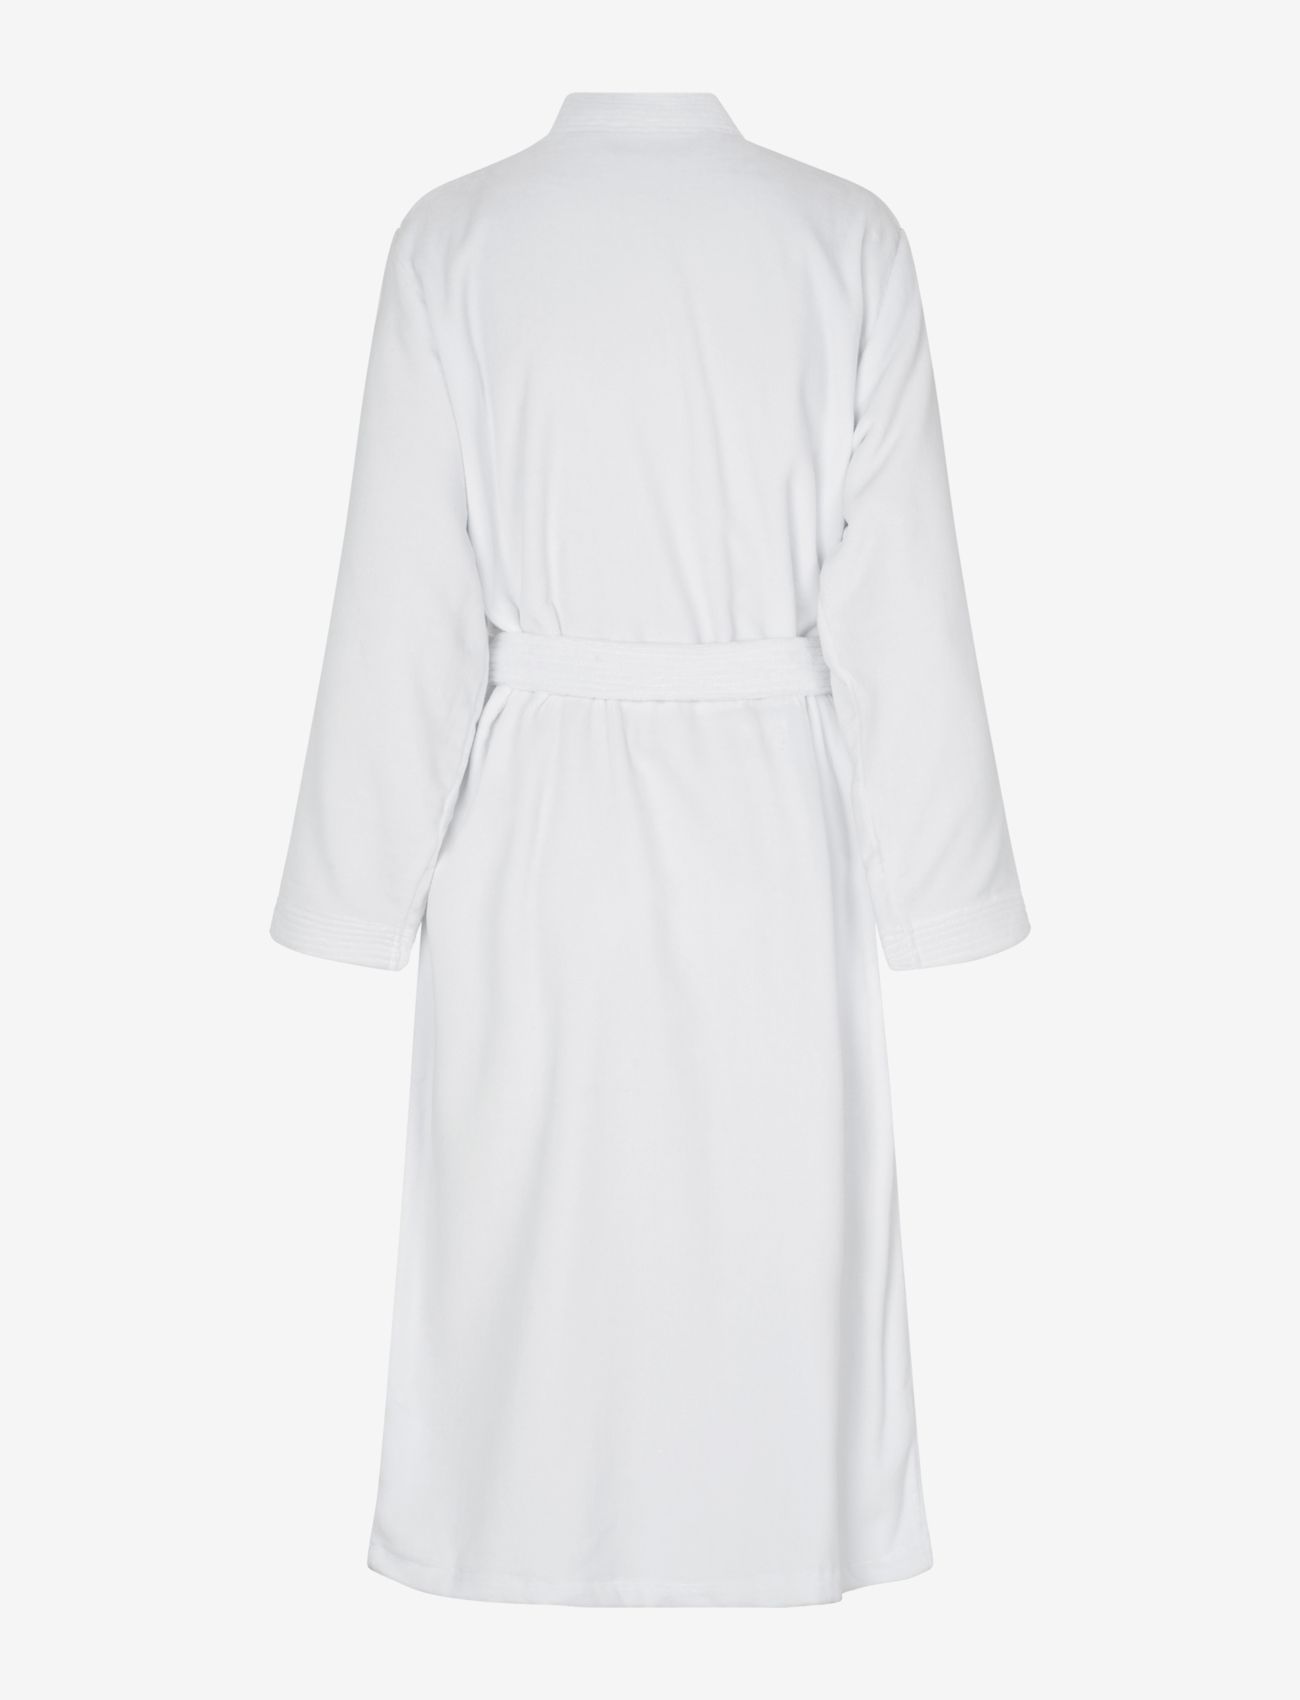 Rosemunde - Organic robe - geburtstagsgeschenke - new white - 1